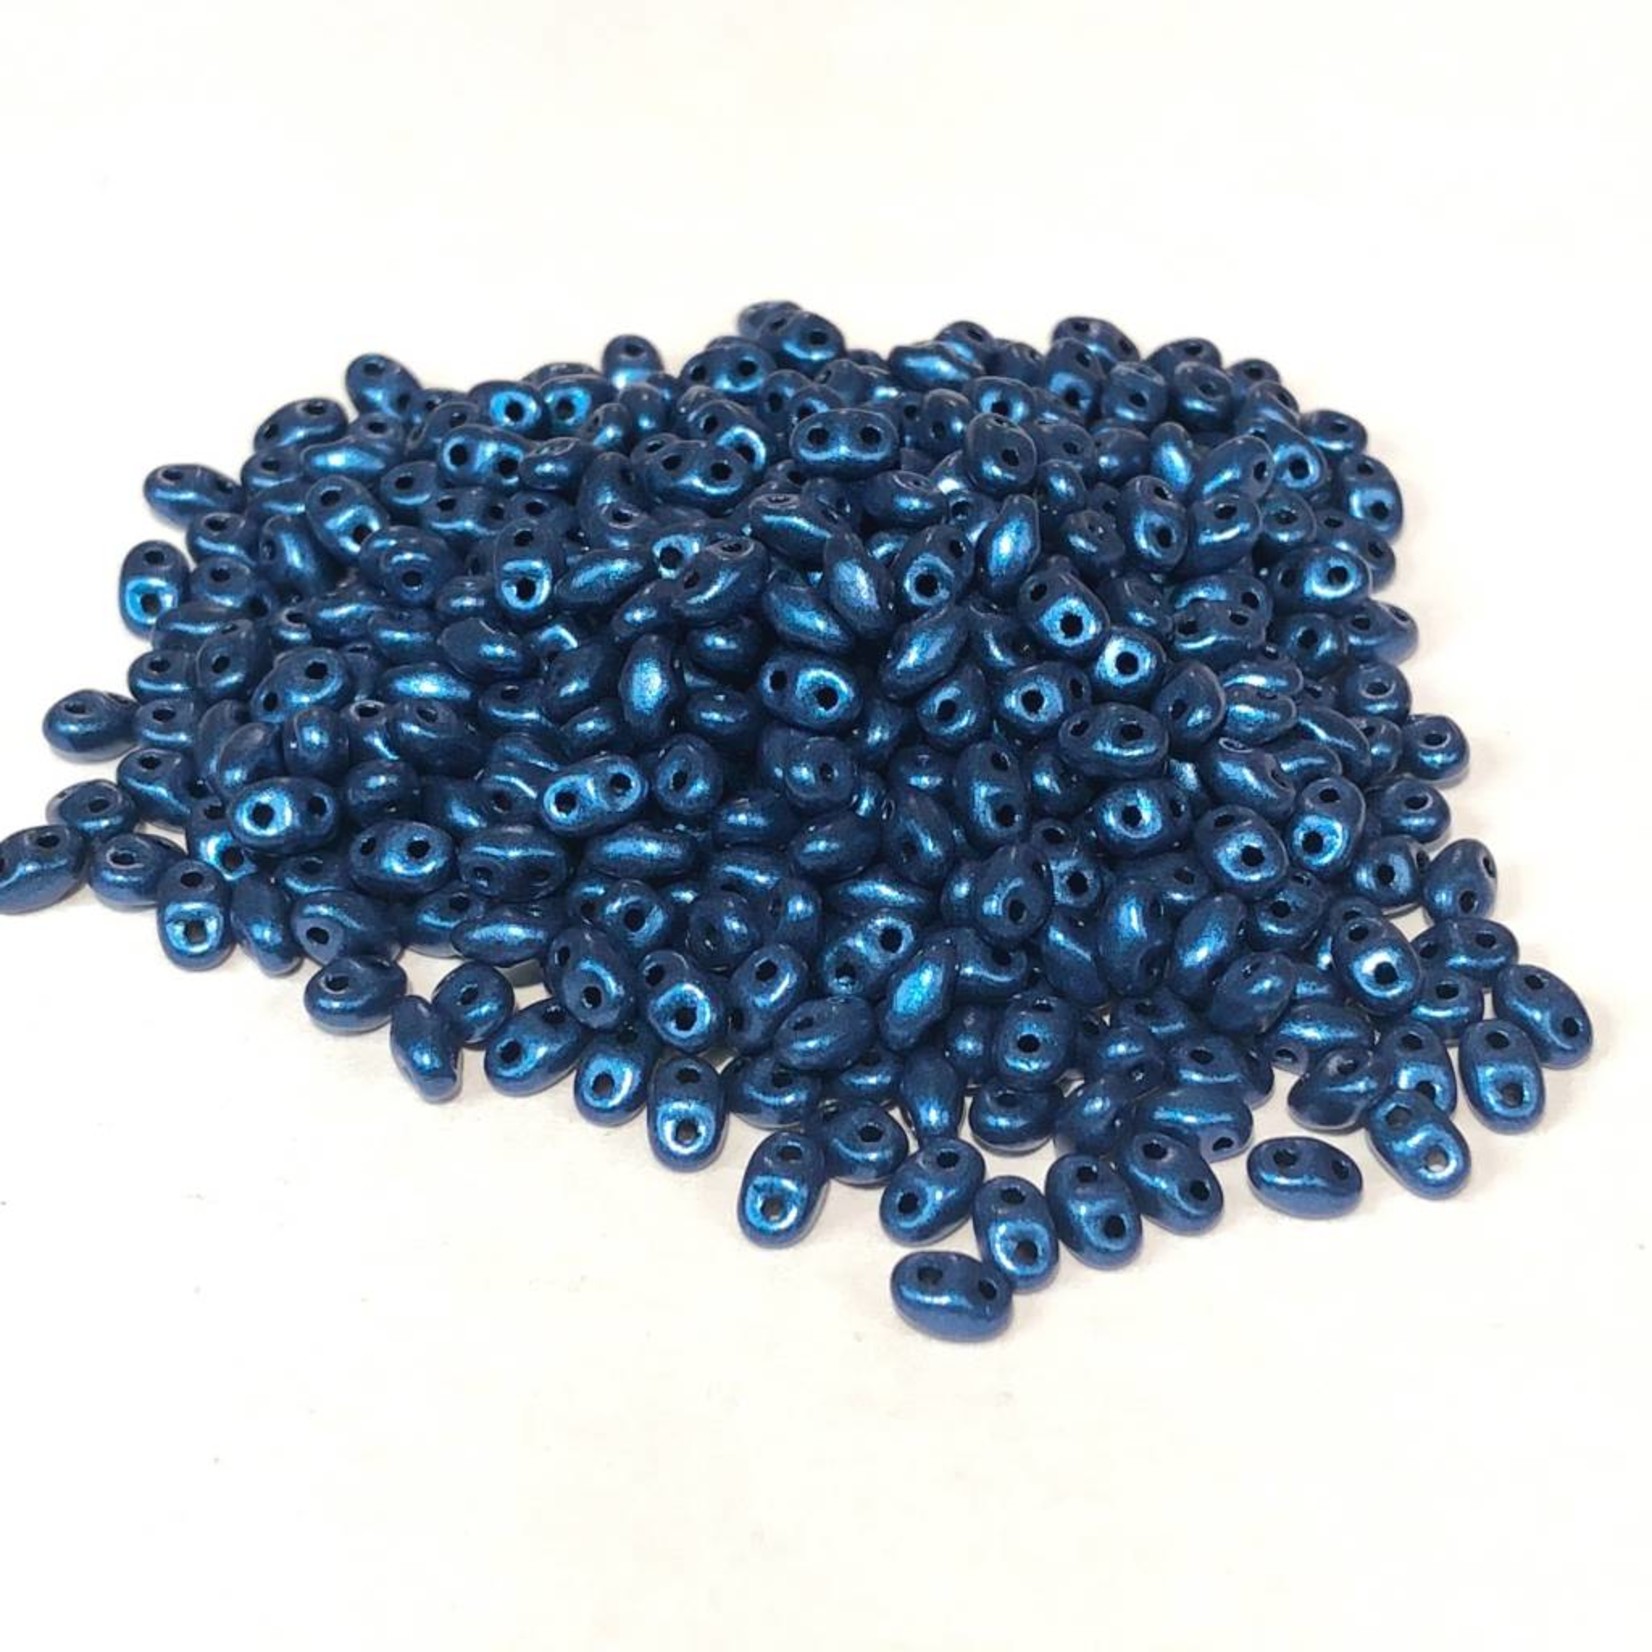 MiniDuo Metallic Suede Blue 15g Tube